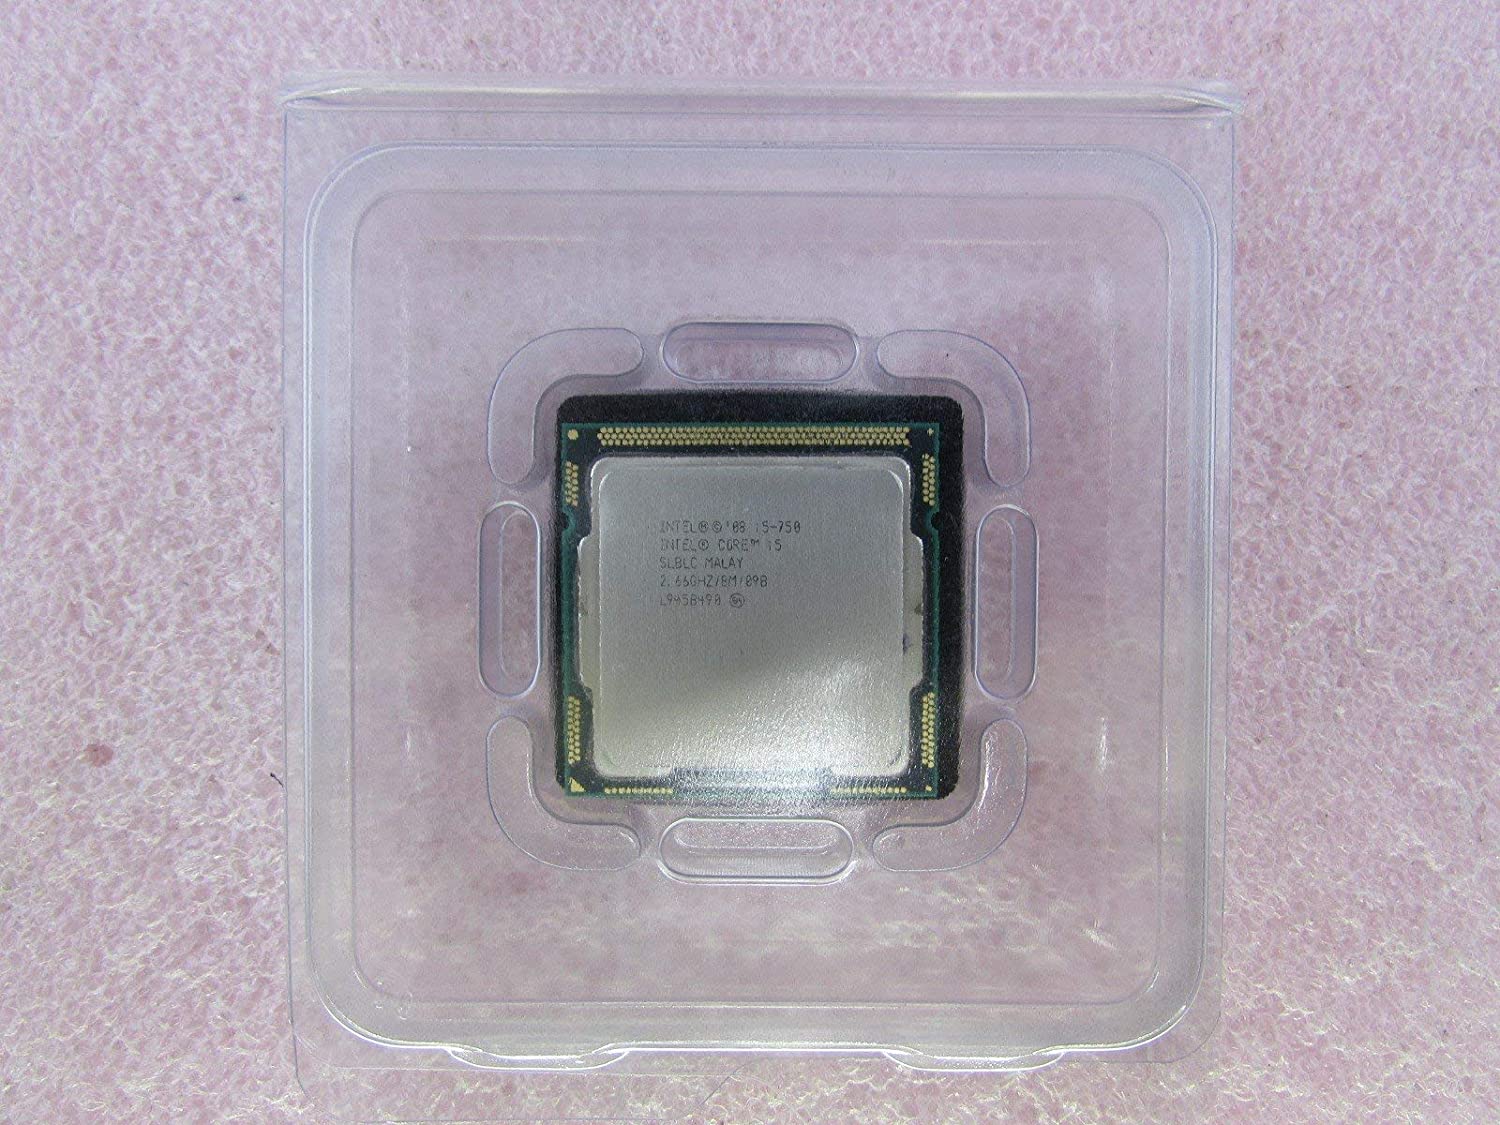 Intel Core i5-750 2.66GHz 2.667GHz 8M SLBLC Socket 1156 Lynnfield CPU Processor (Renewed)